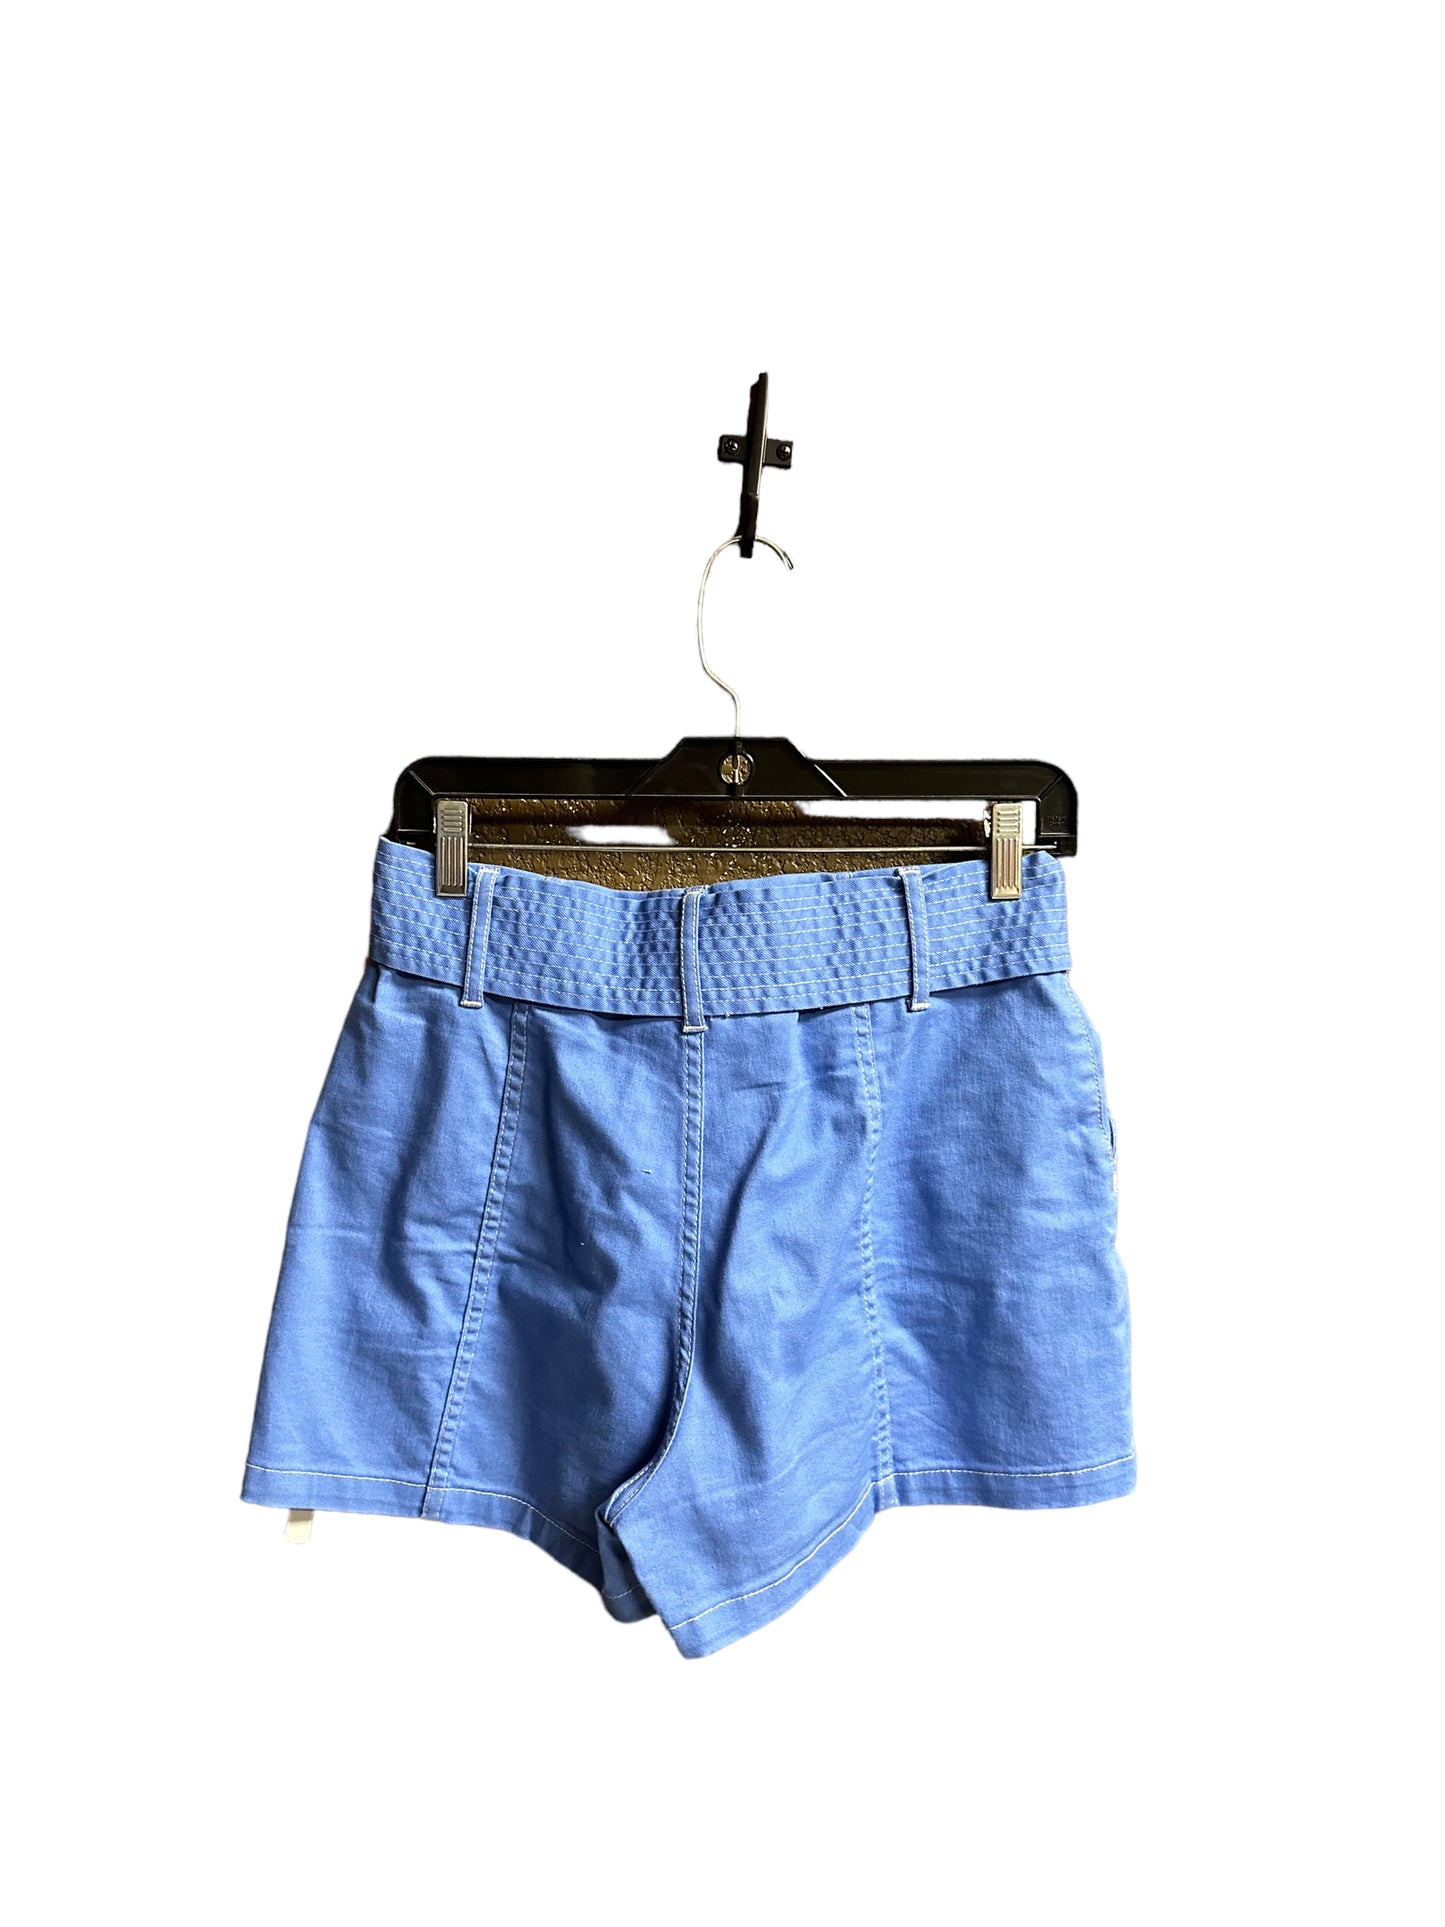 Shorts By Giani Bernini  Size: 6